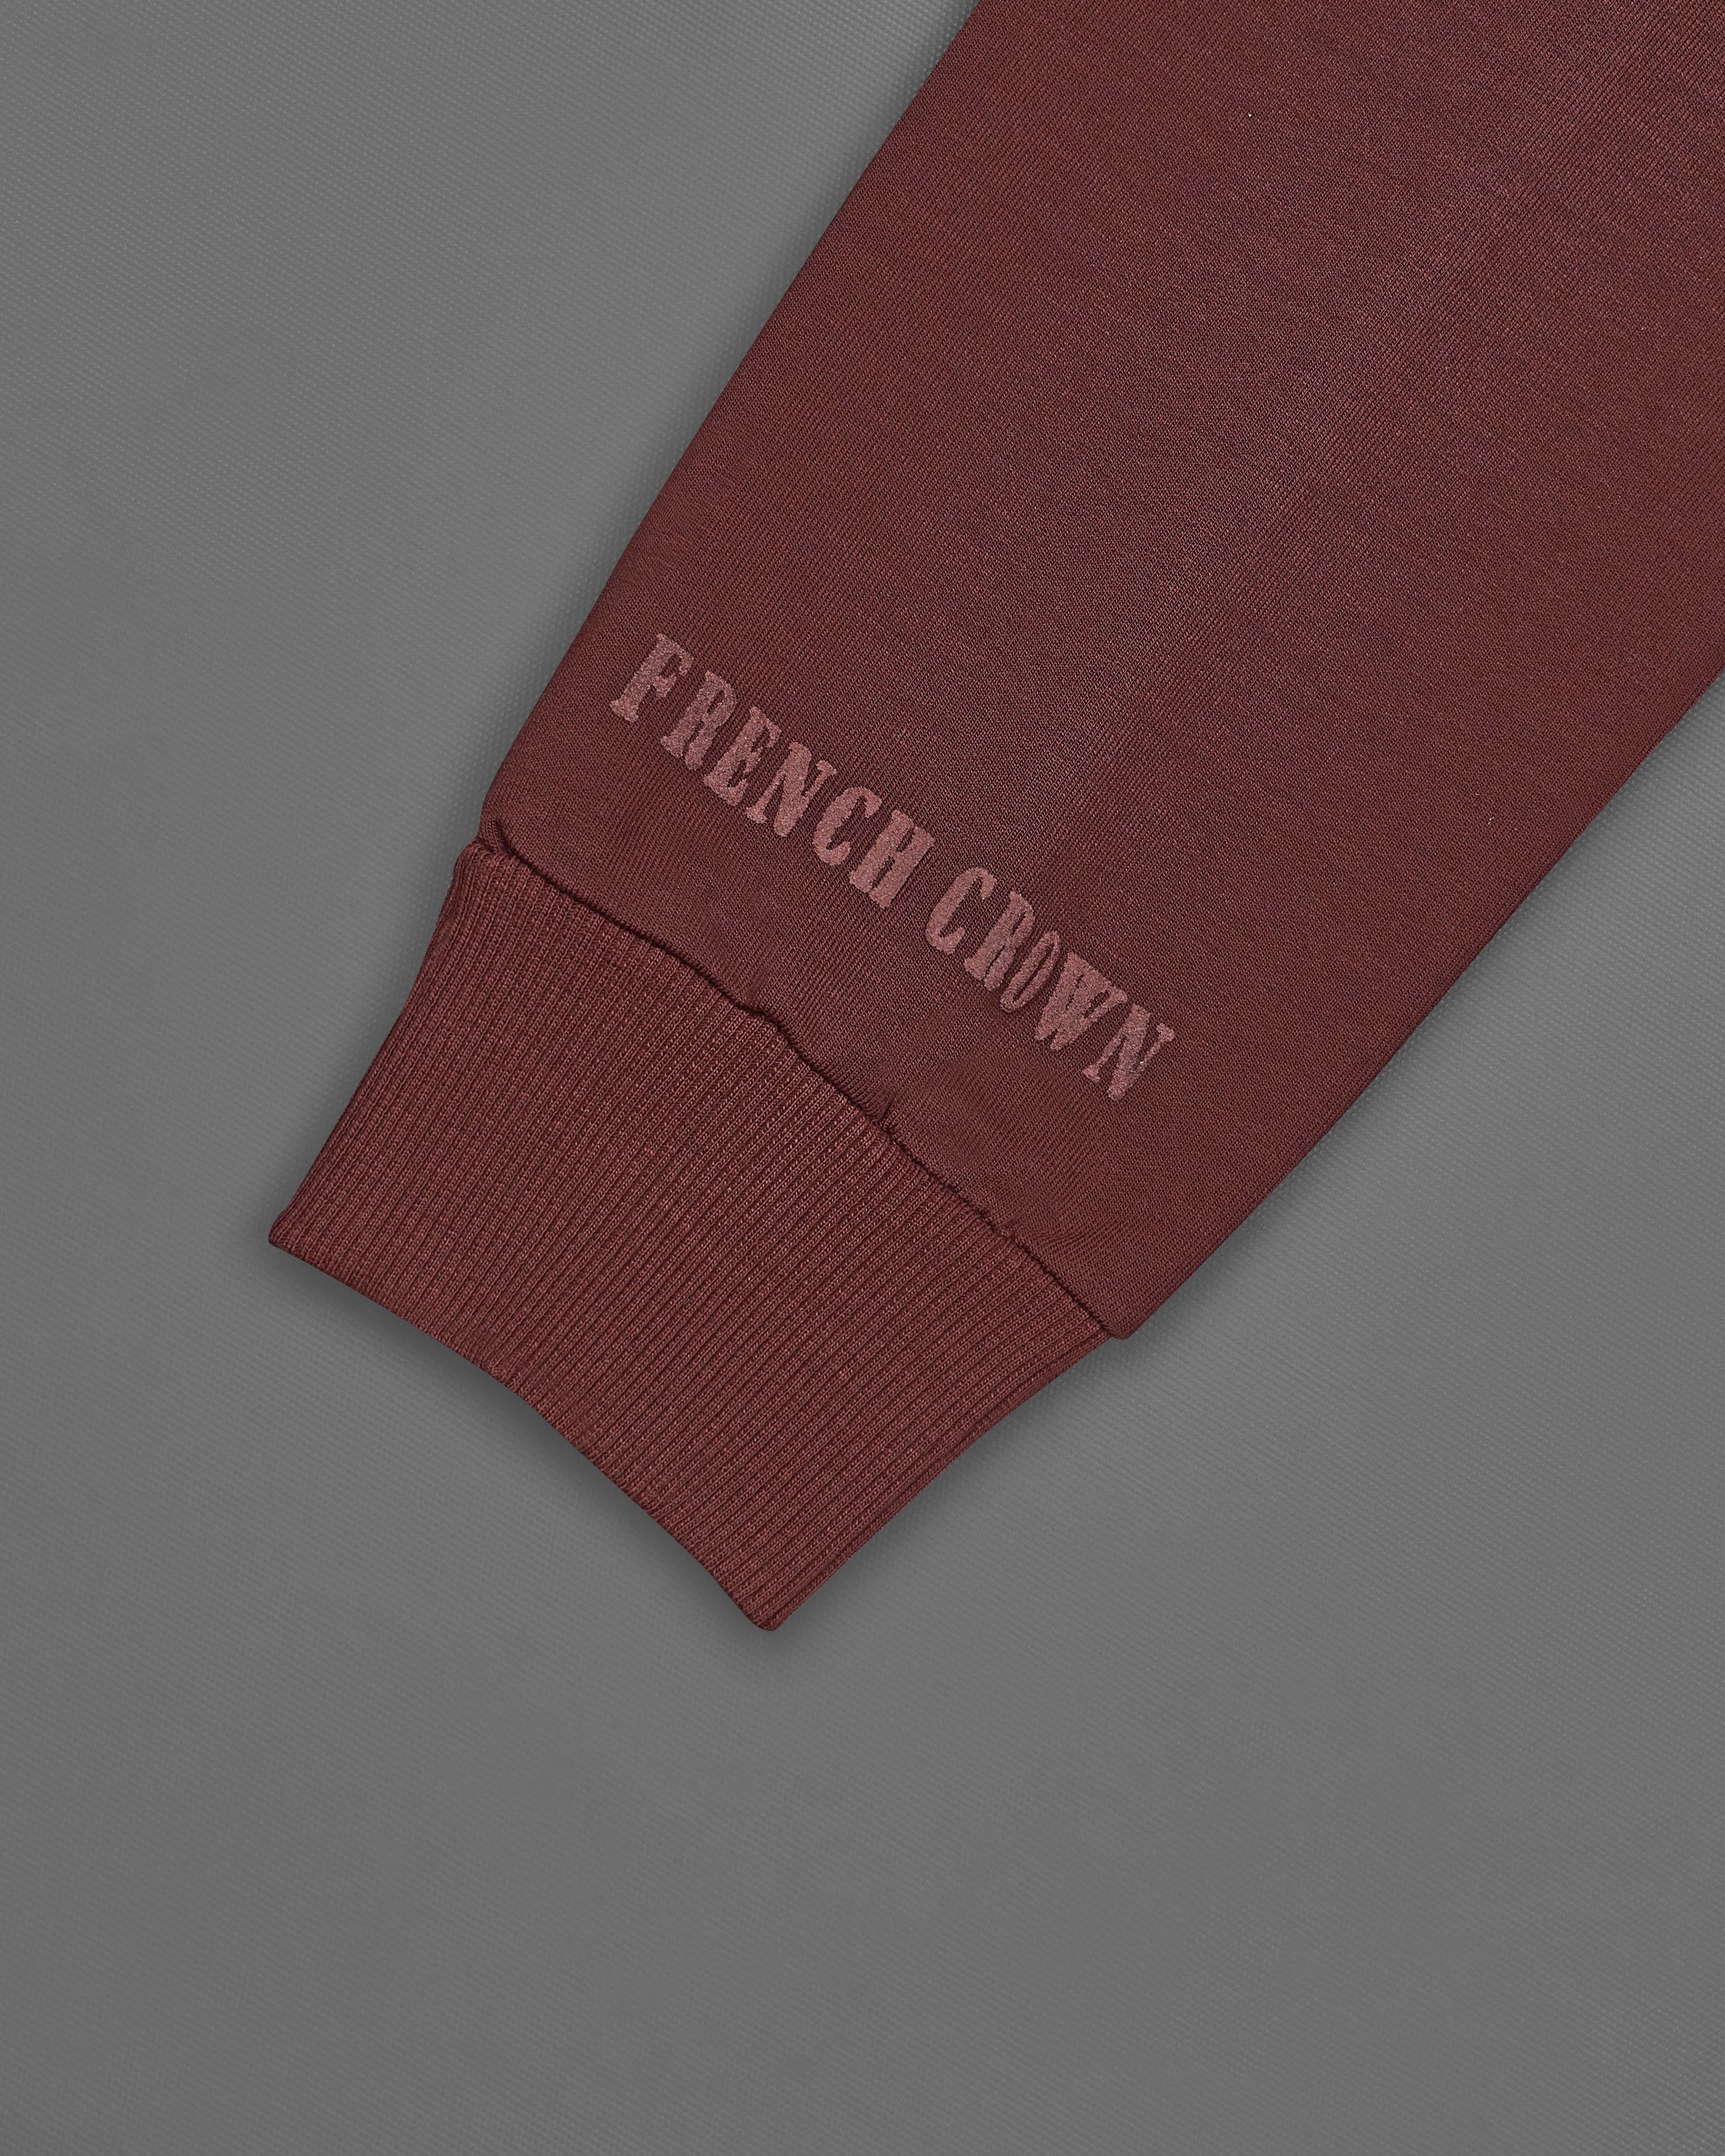 Taupe Brown Multicolour Patchwork Premium Cotton Designer Sweatshirt TS058-W01-S, TS058-W01-M, TS058-W01-L, TS058-W01-XL, TS058-W01-XXL